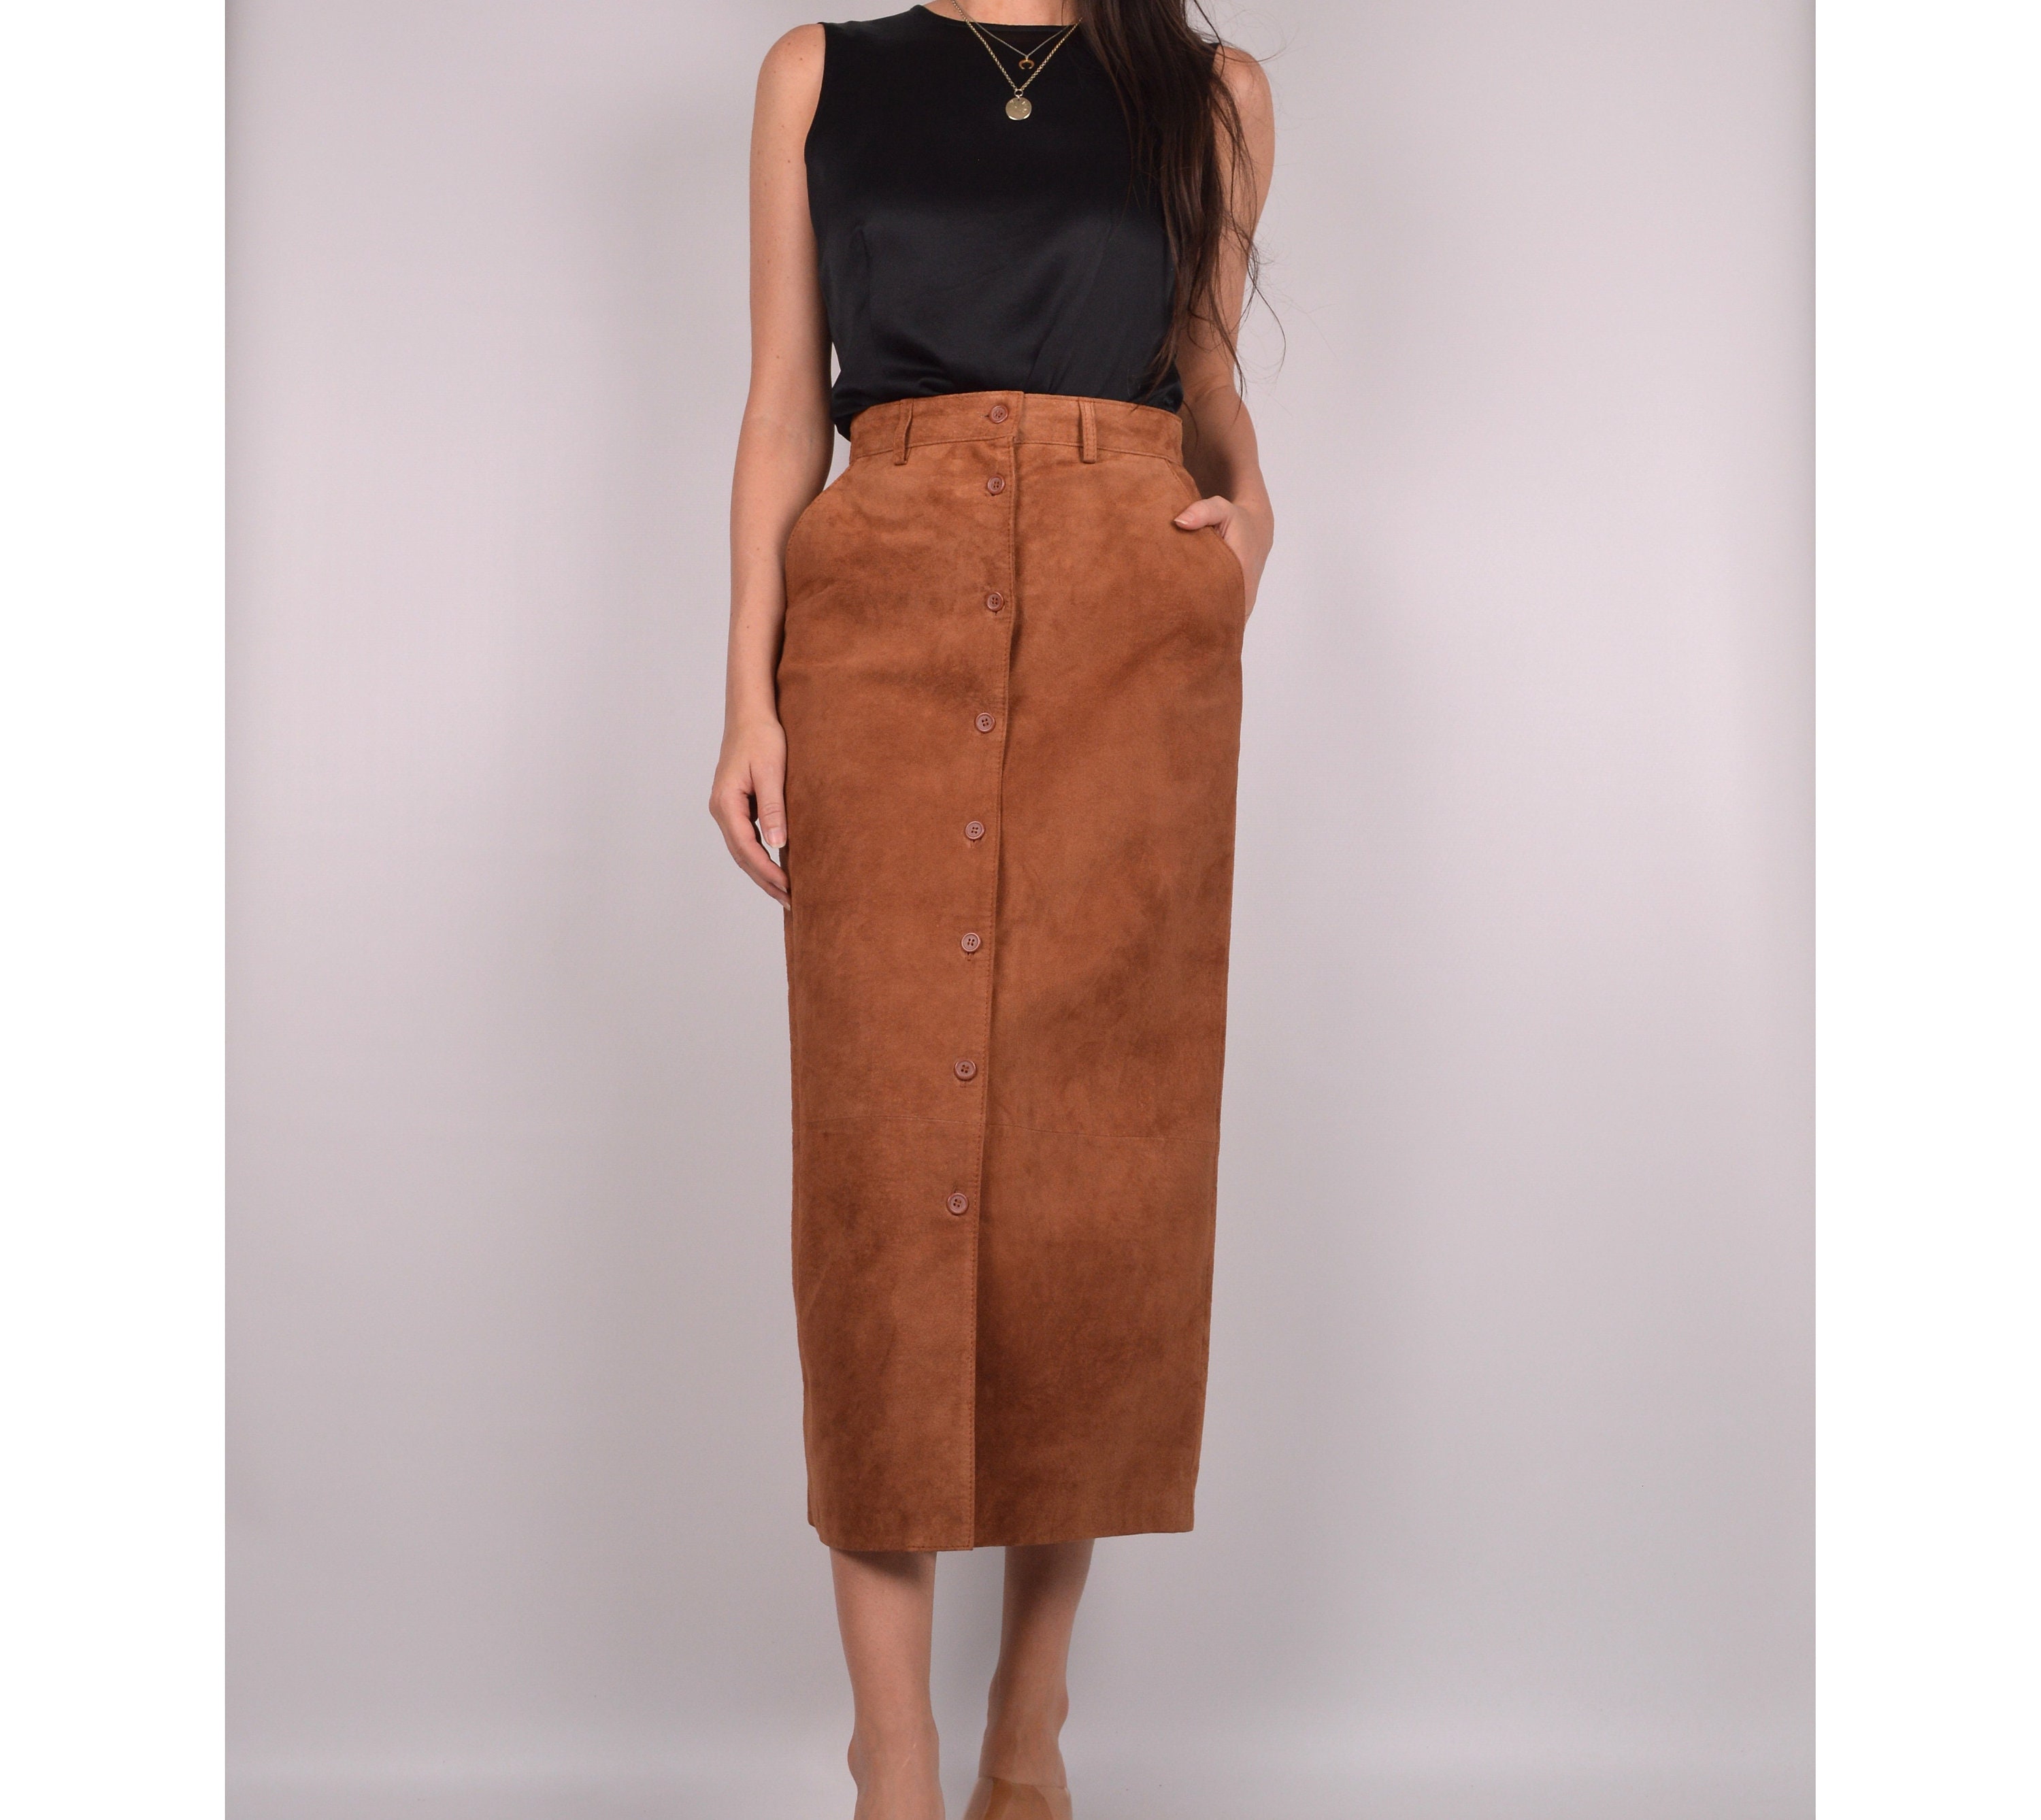 SALE Vintage Brown Suede High Waist Midi Skirt / 26W